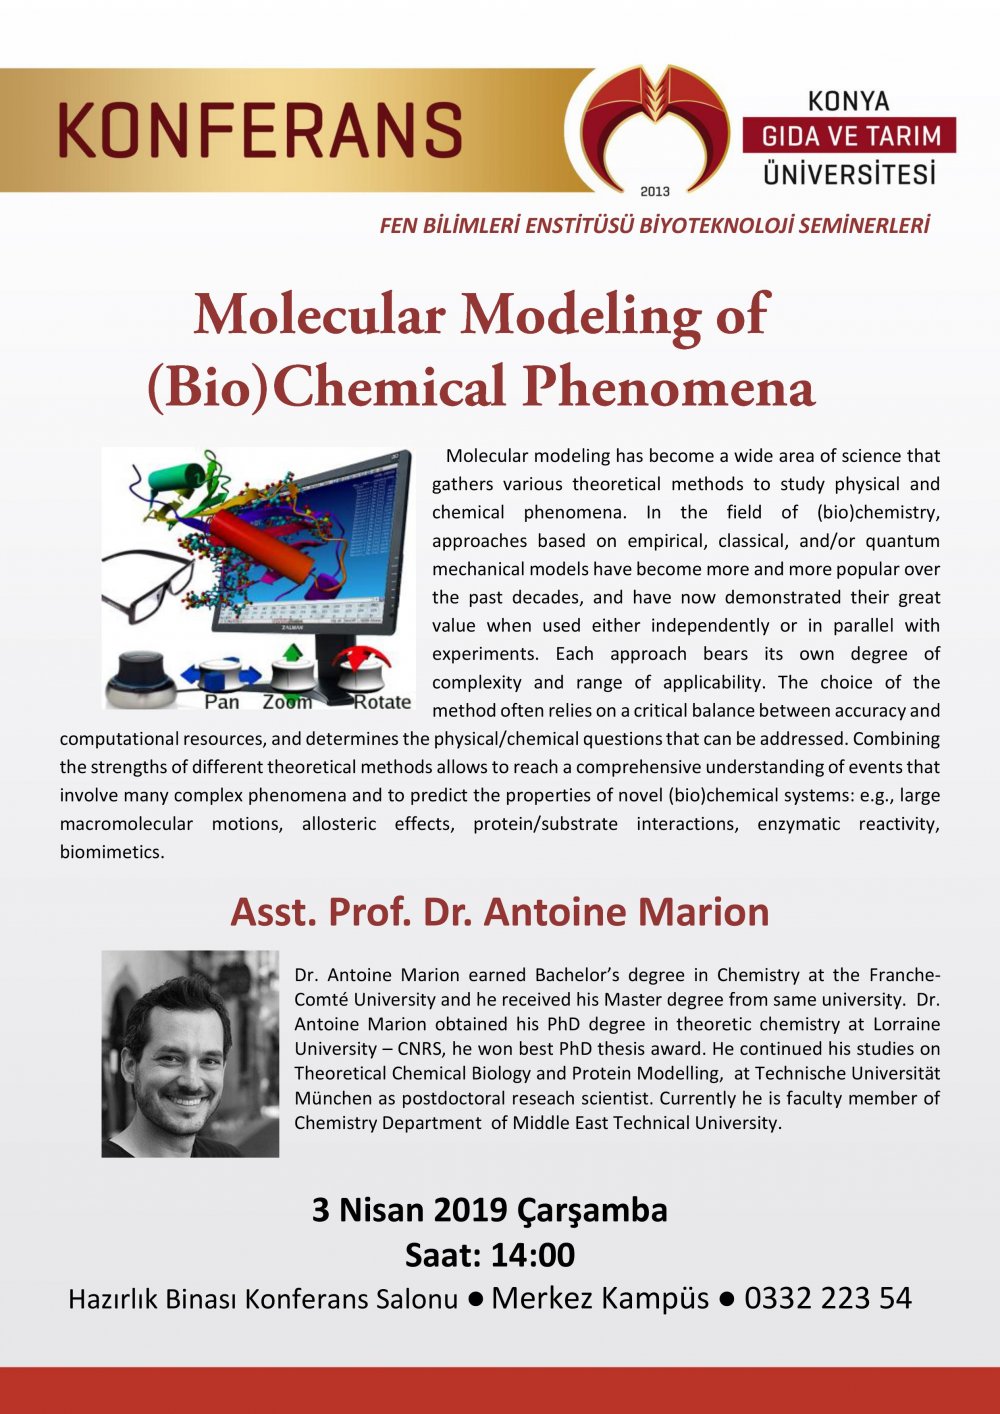 Konferans - Molecular Modeling of (Bio) Chemical Phenomena / 3 Nisan 2019 Çarşamba 14:00